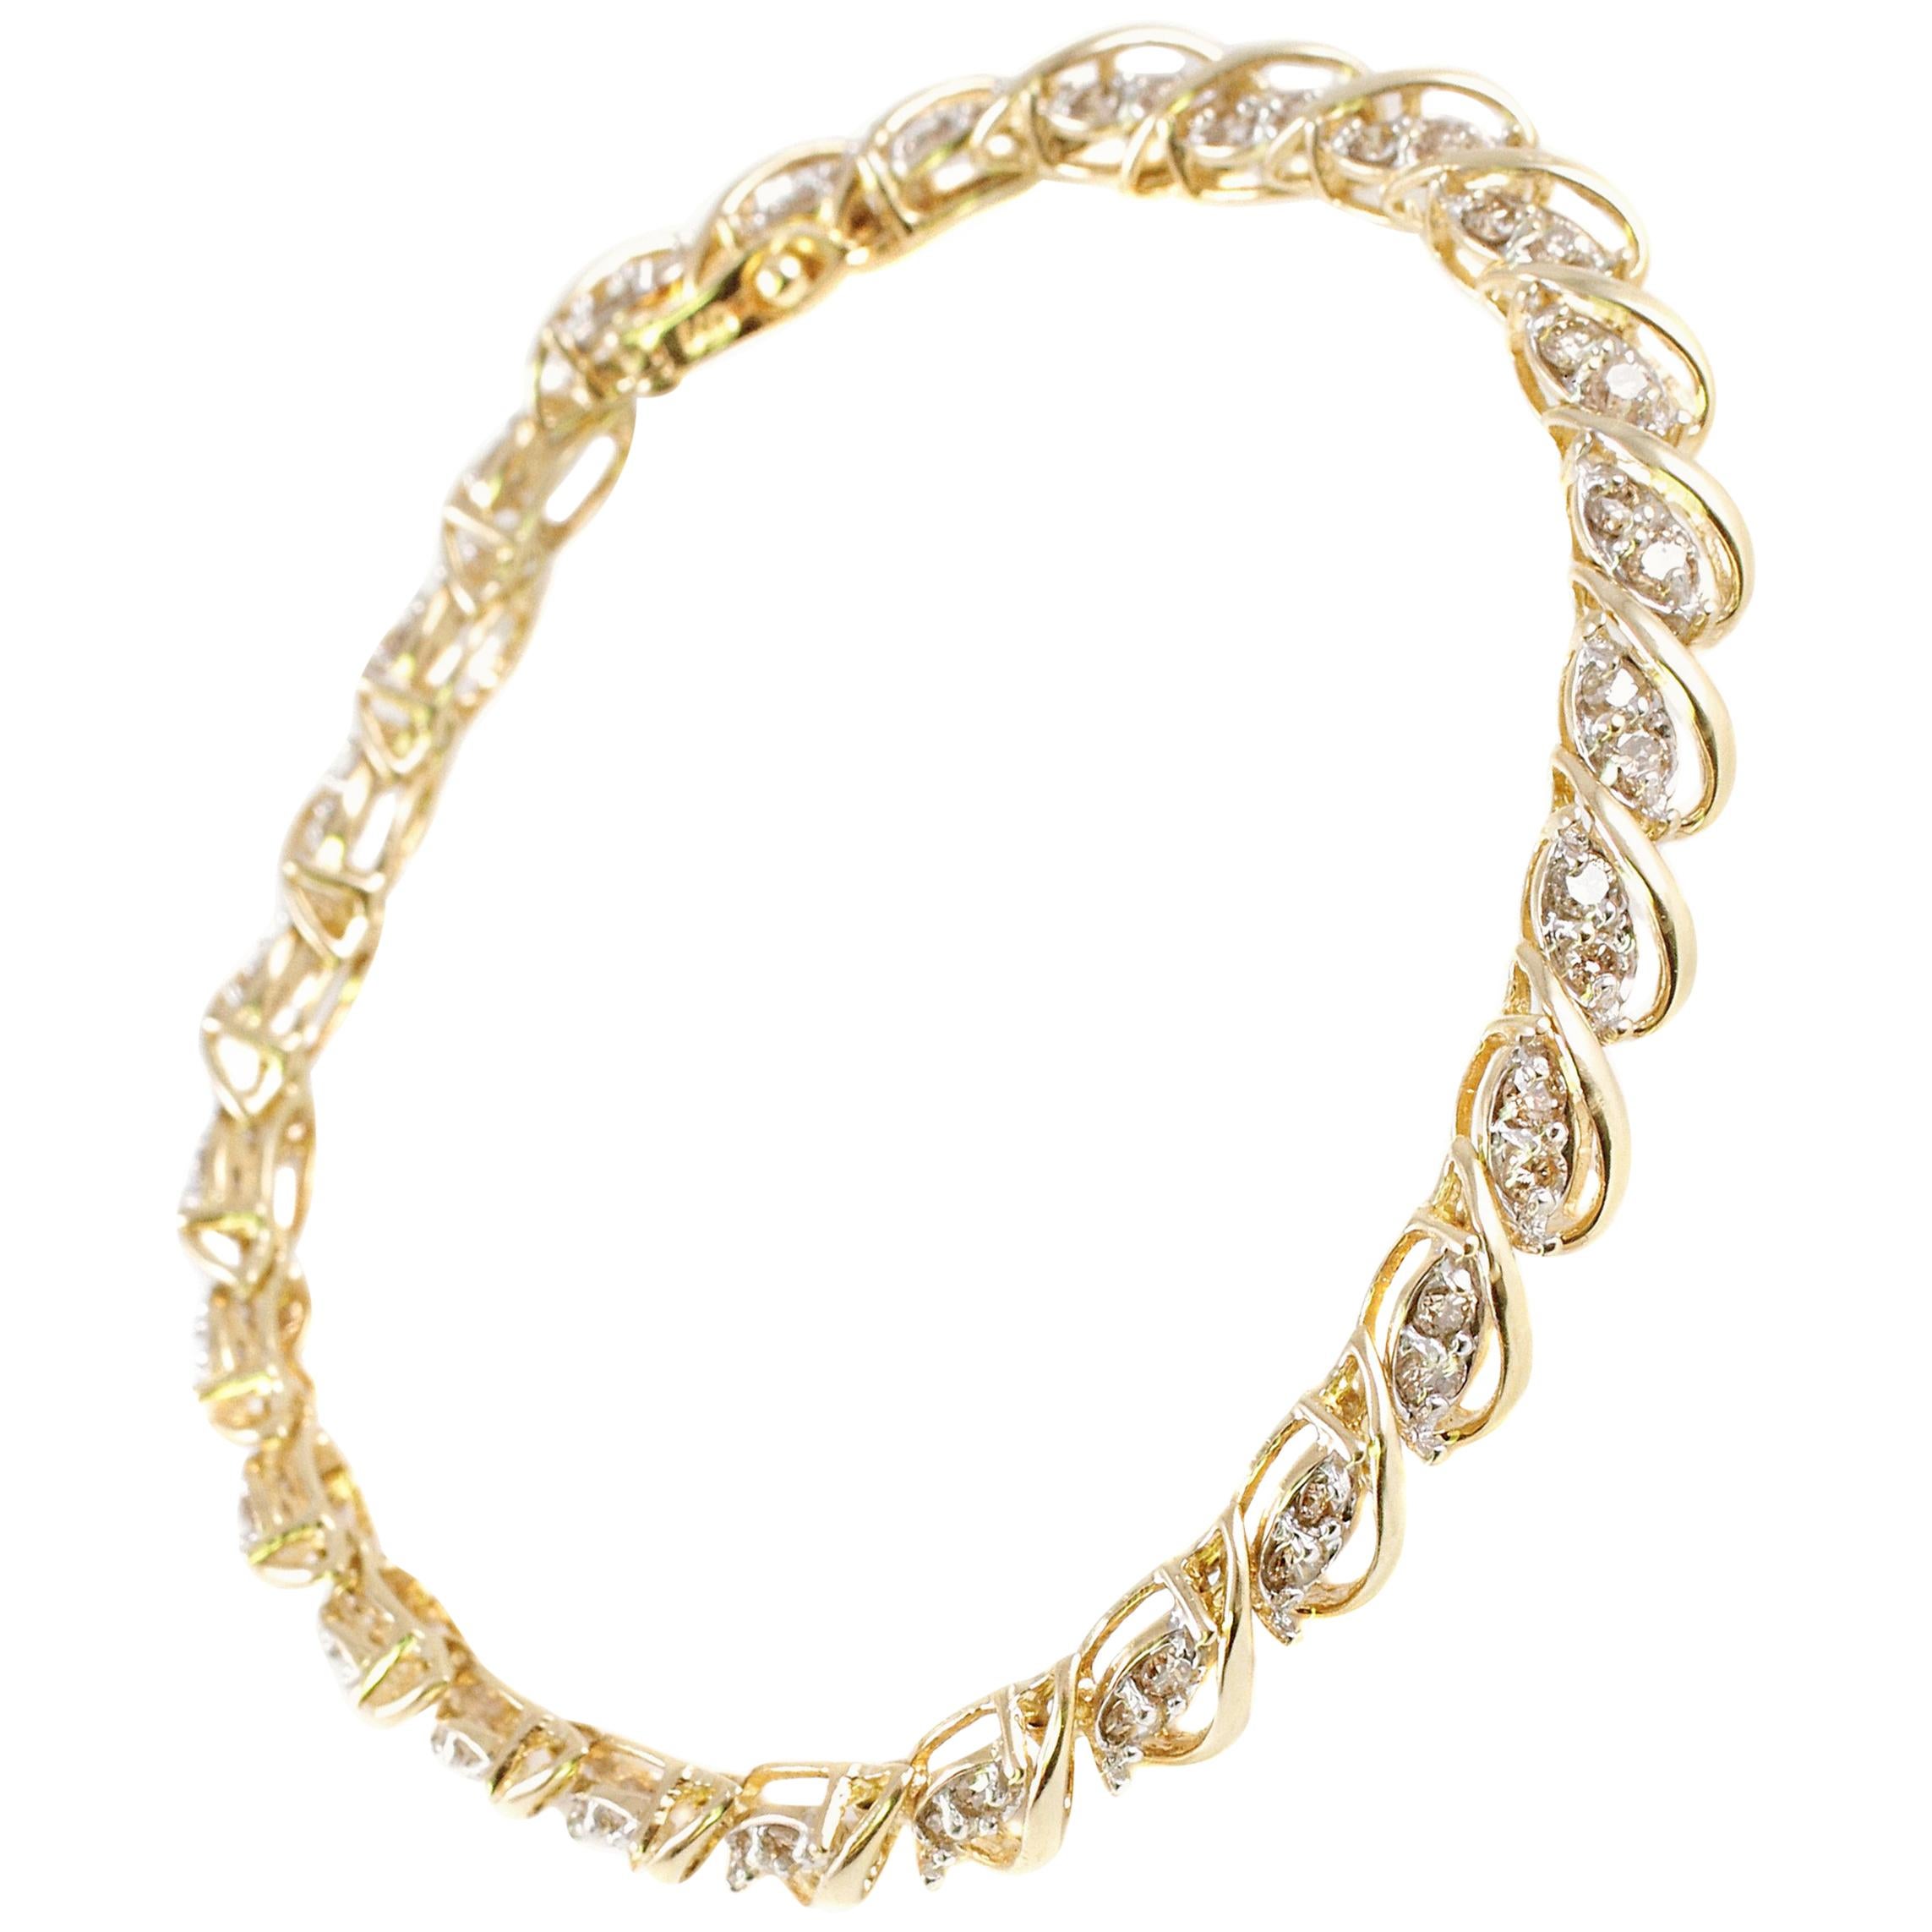 1.50 Carat Diamond Bracelet in 14 Karat Yellow Gold